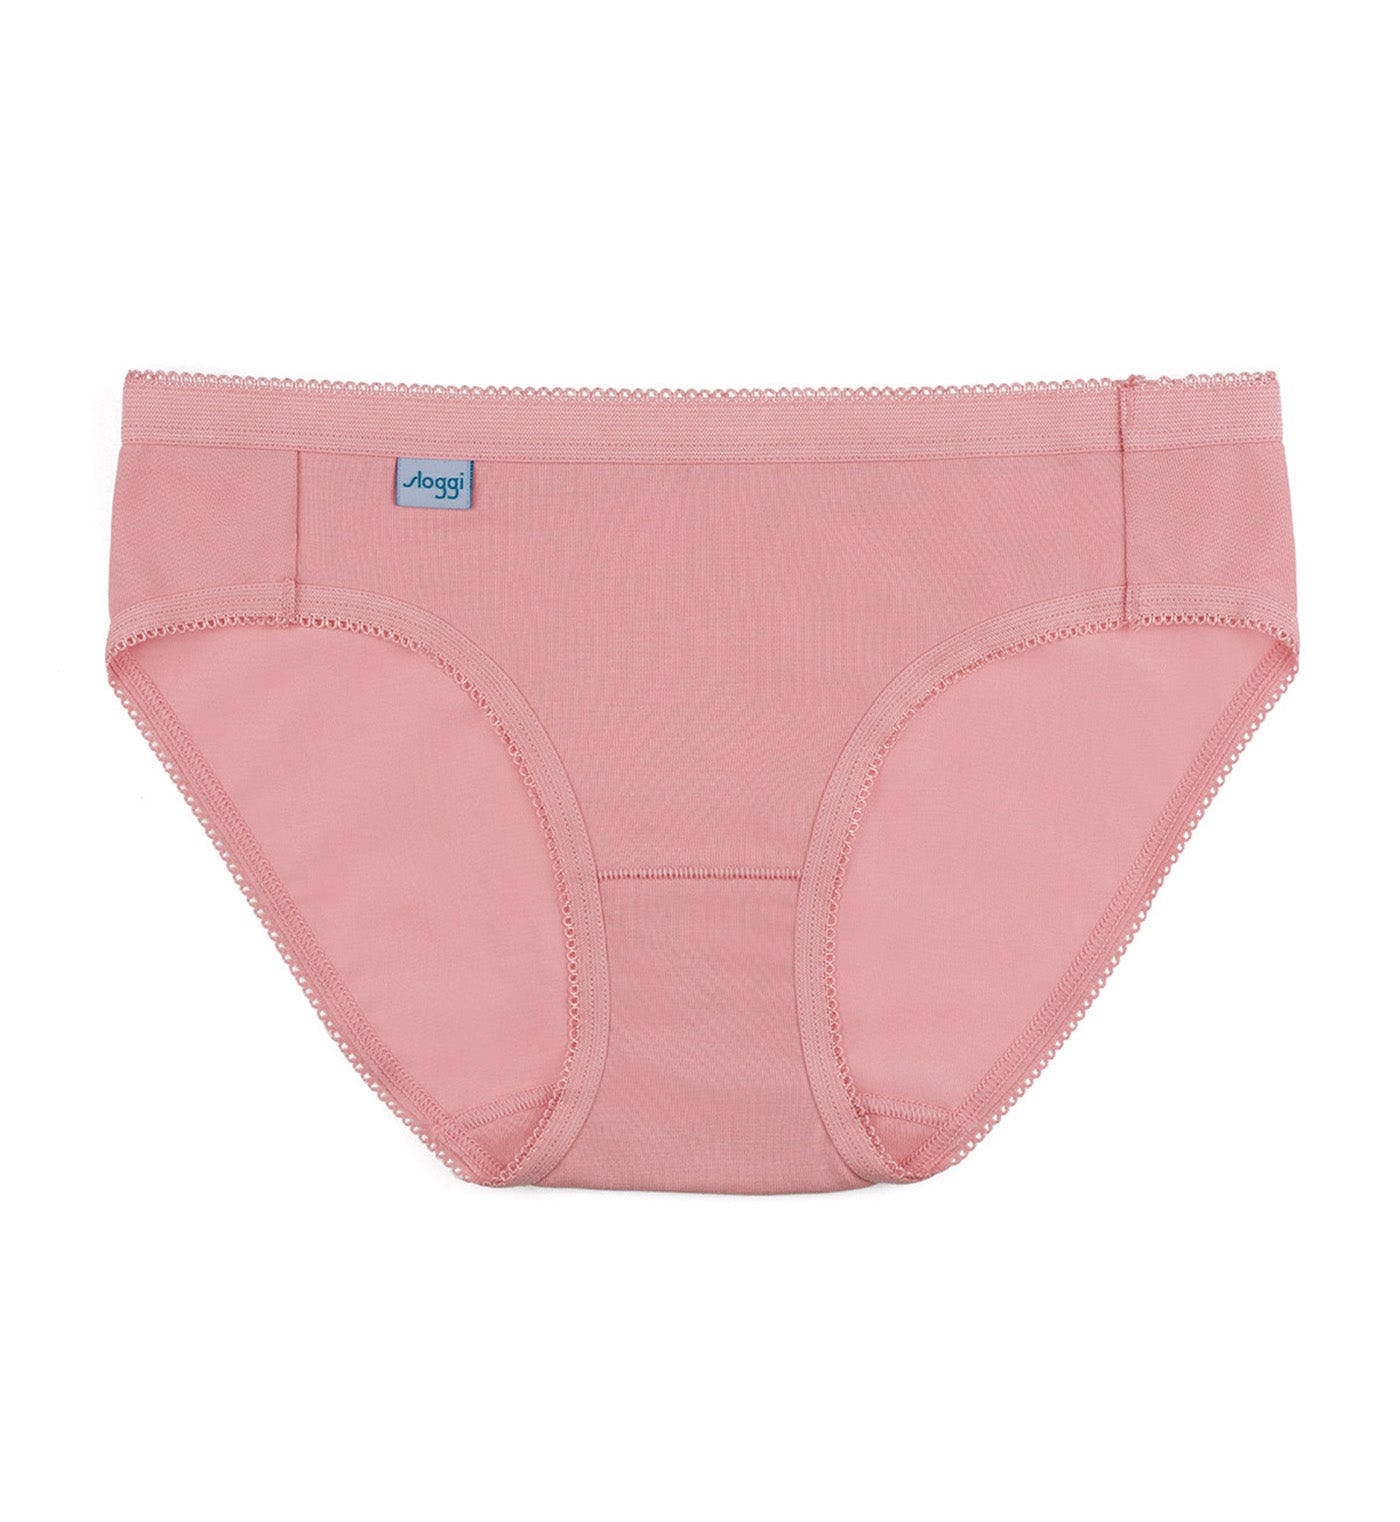 Sloggi - Triumph (JO)  Shop Online Sloggi Underwear